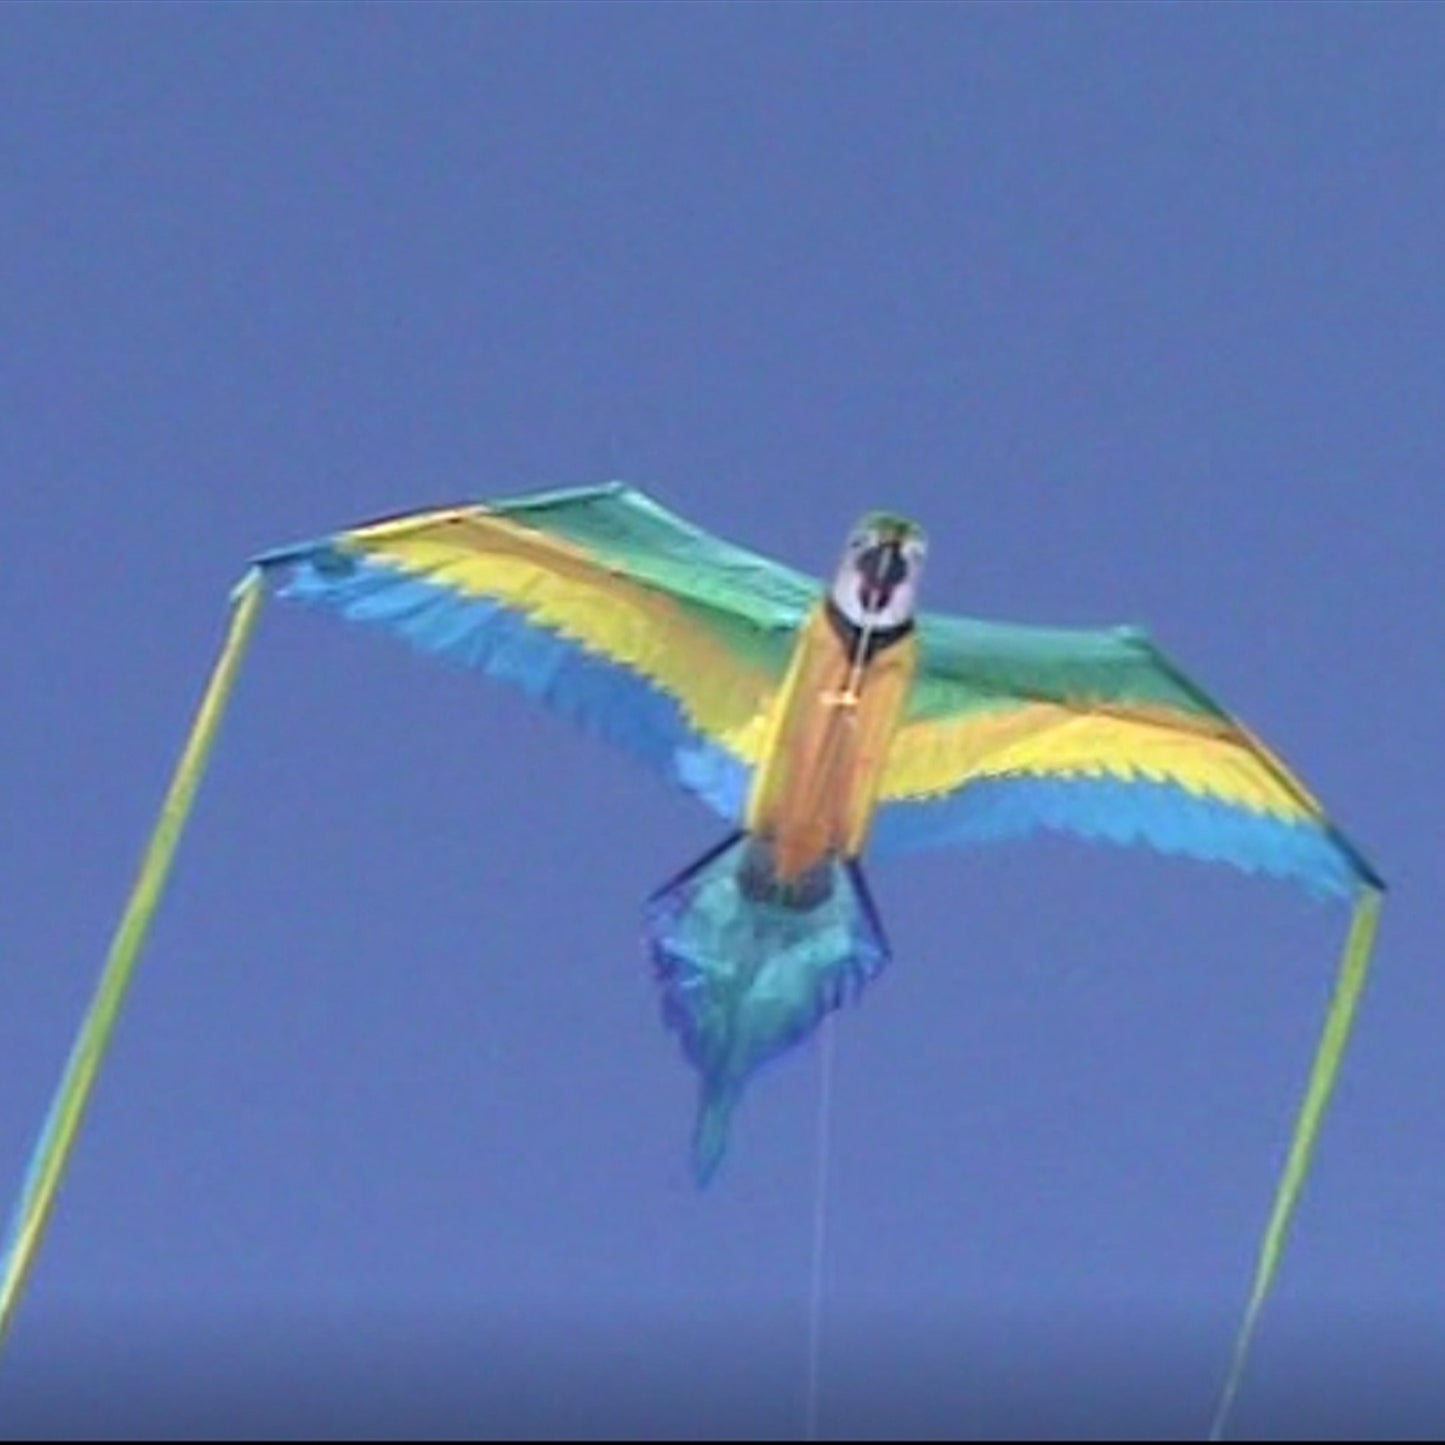 windnsun rainforest macaw nylon kite flying